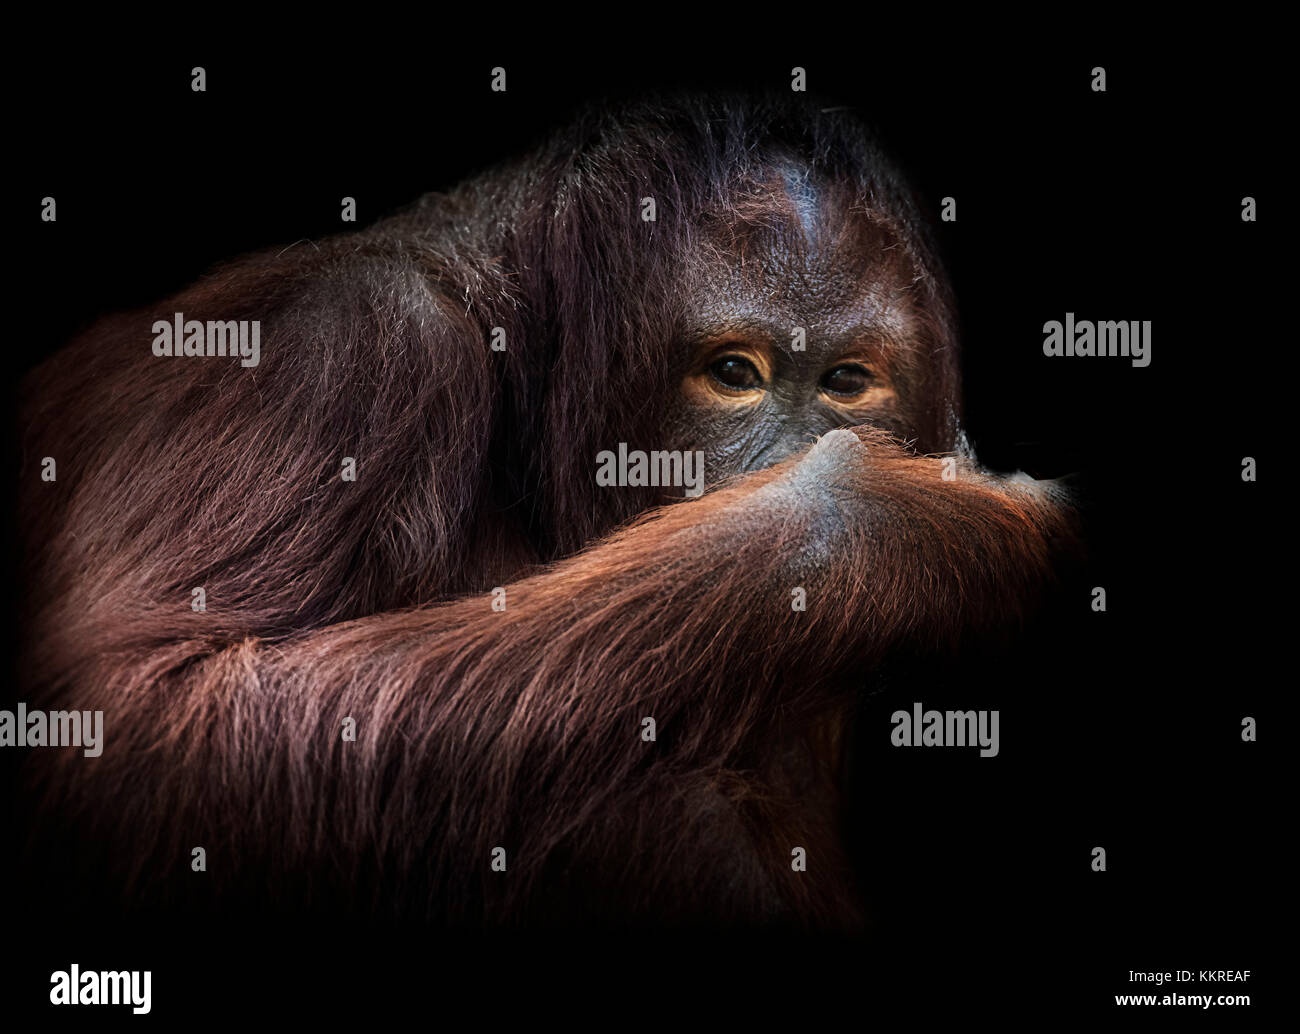 Orang-utan auf Schwarz, Porträt Stockfoto